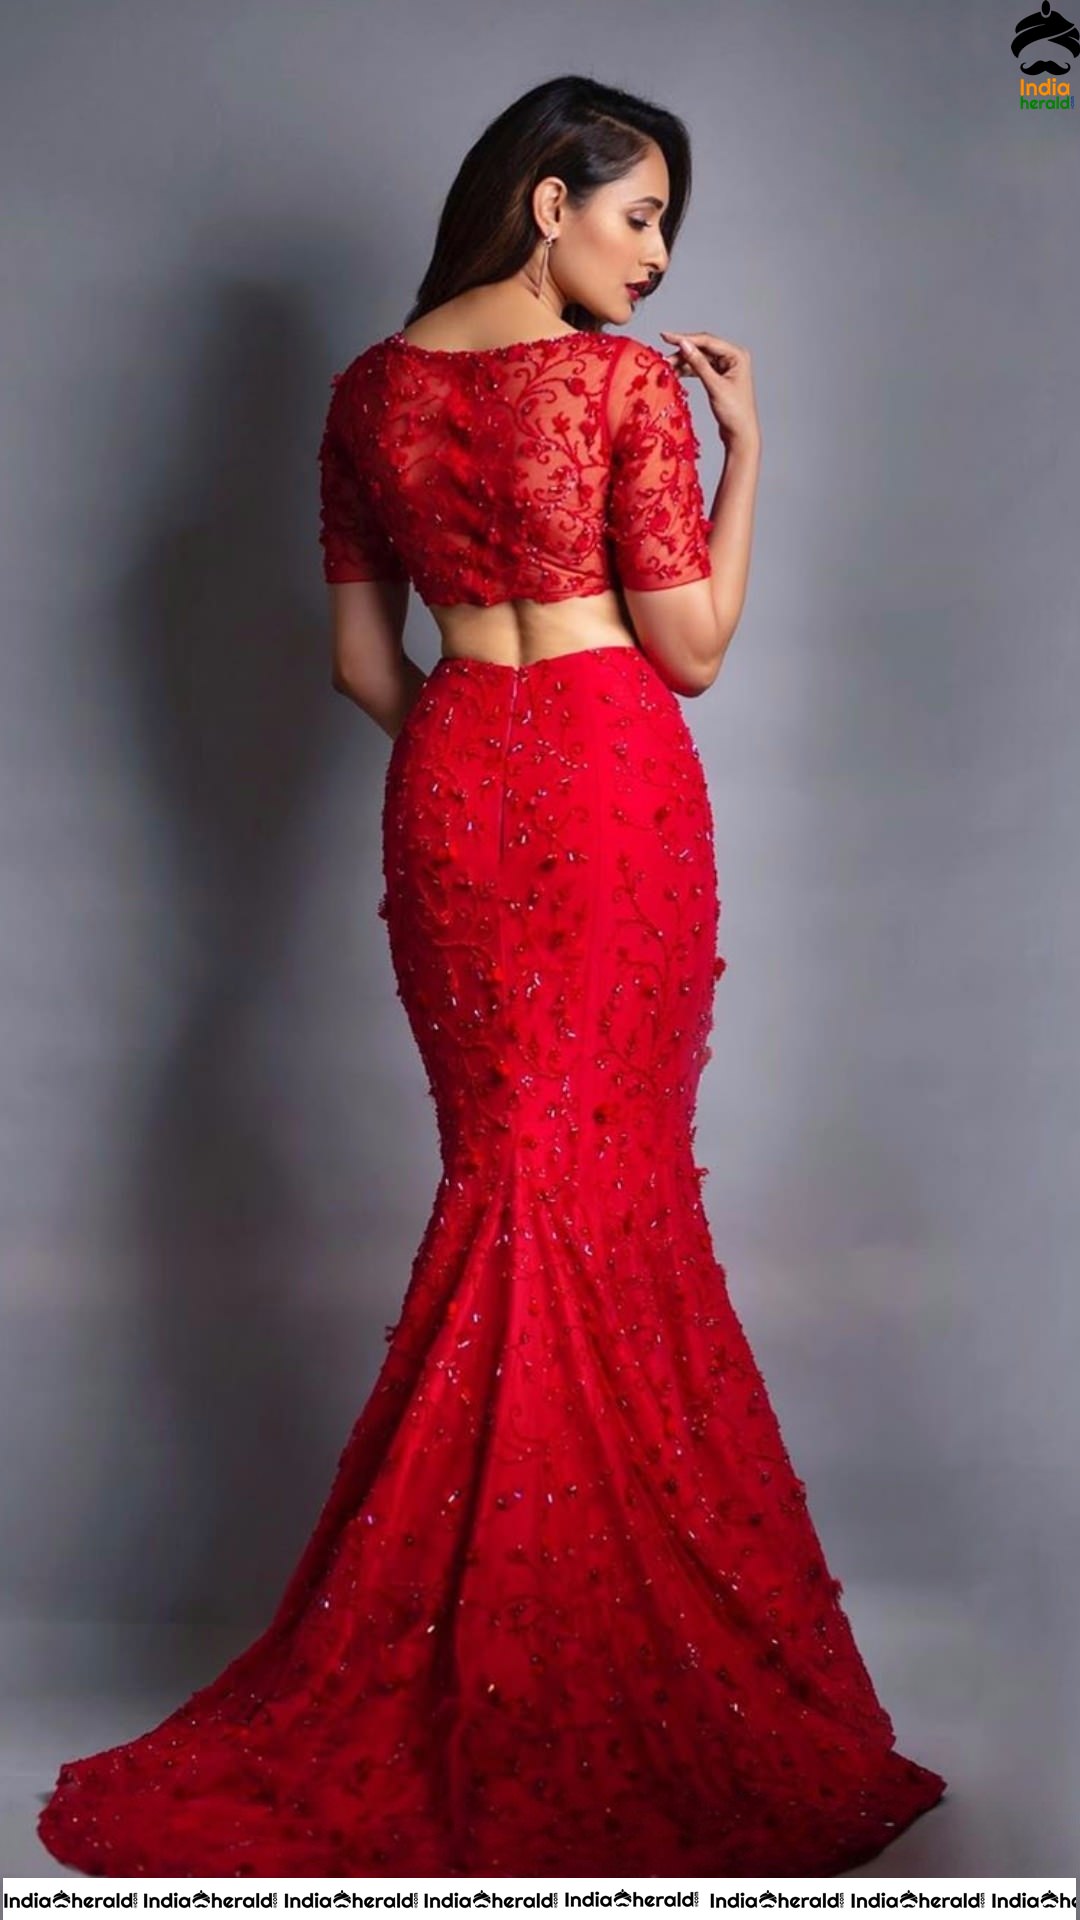 Hot Pragya Jaiswal Shows Her waistline For A Red Hot Photoshoot